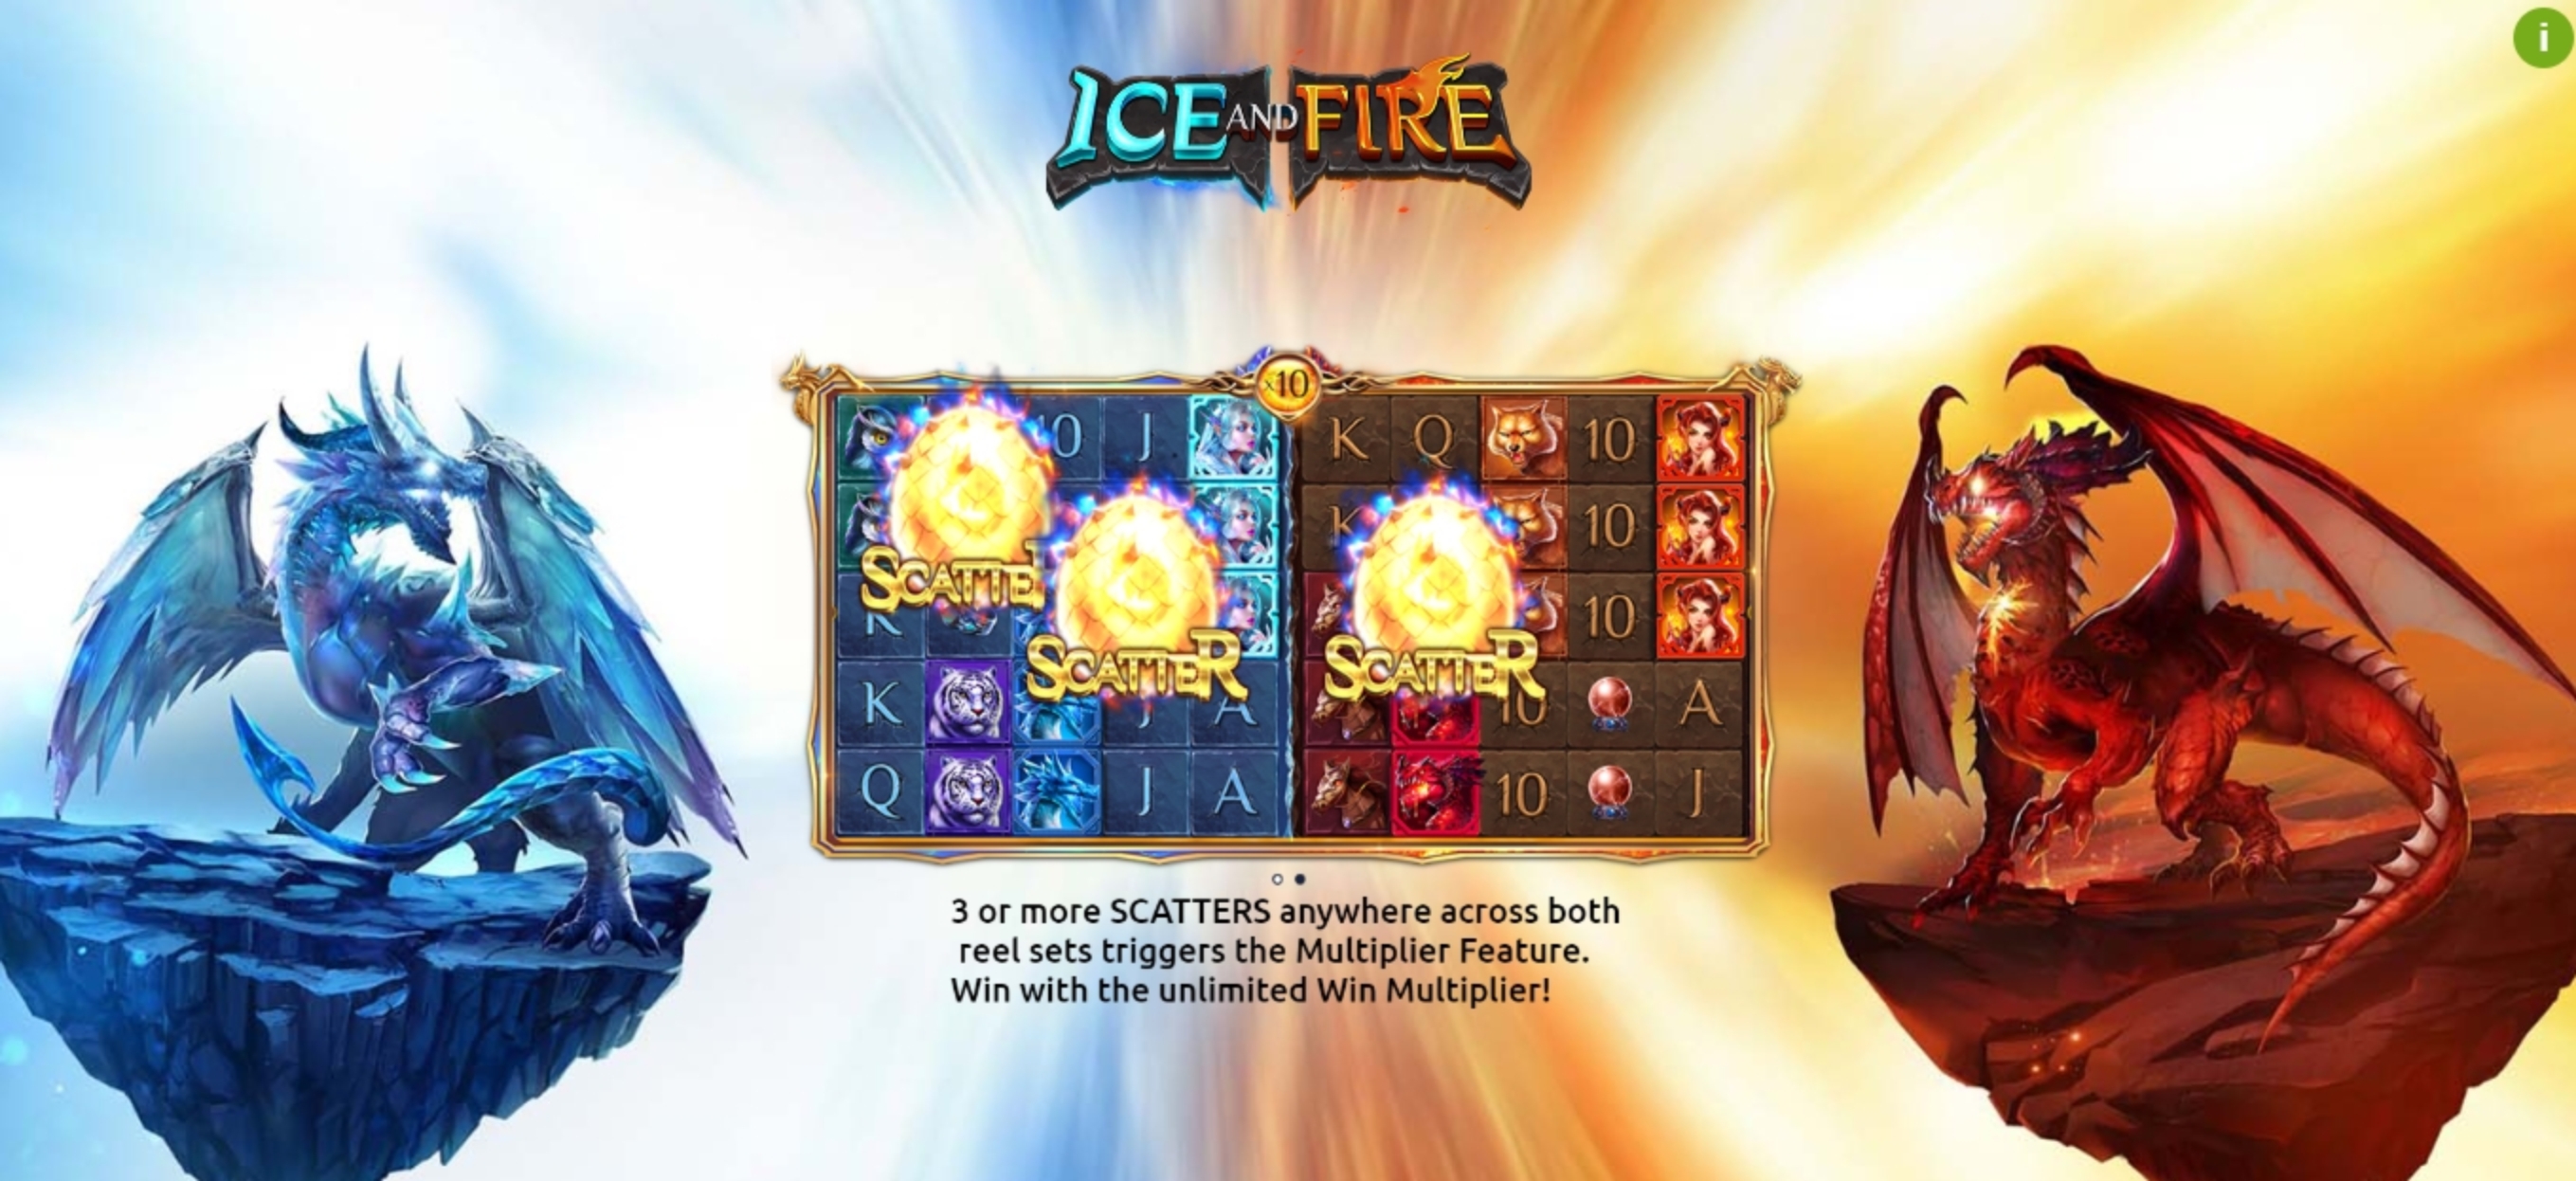 Team Fire or Team Ice? - Slot Machine Challenge